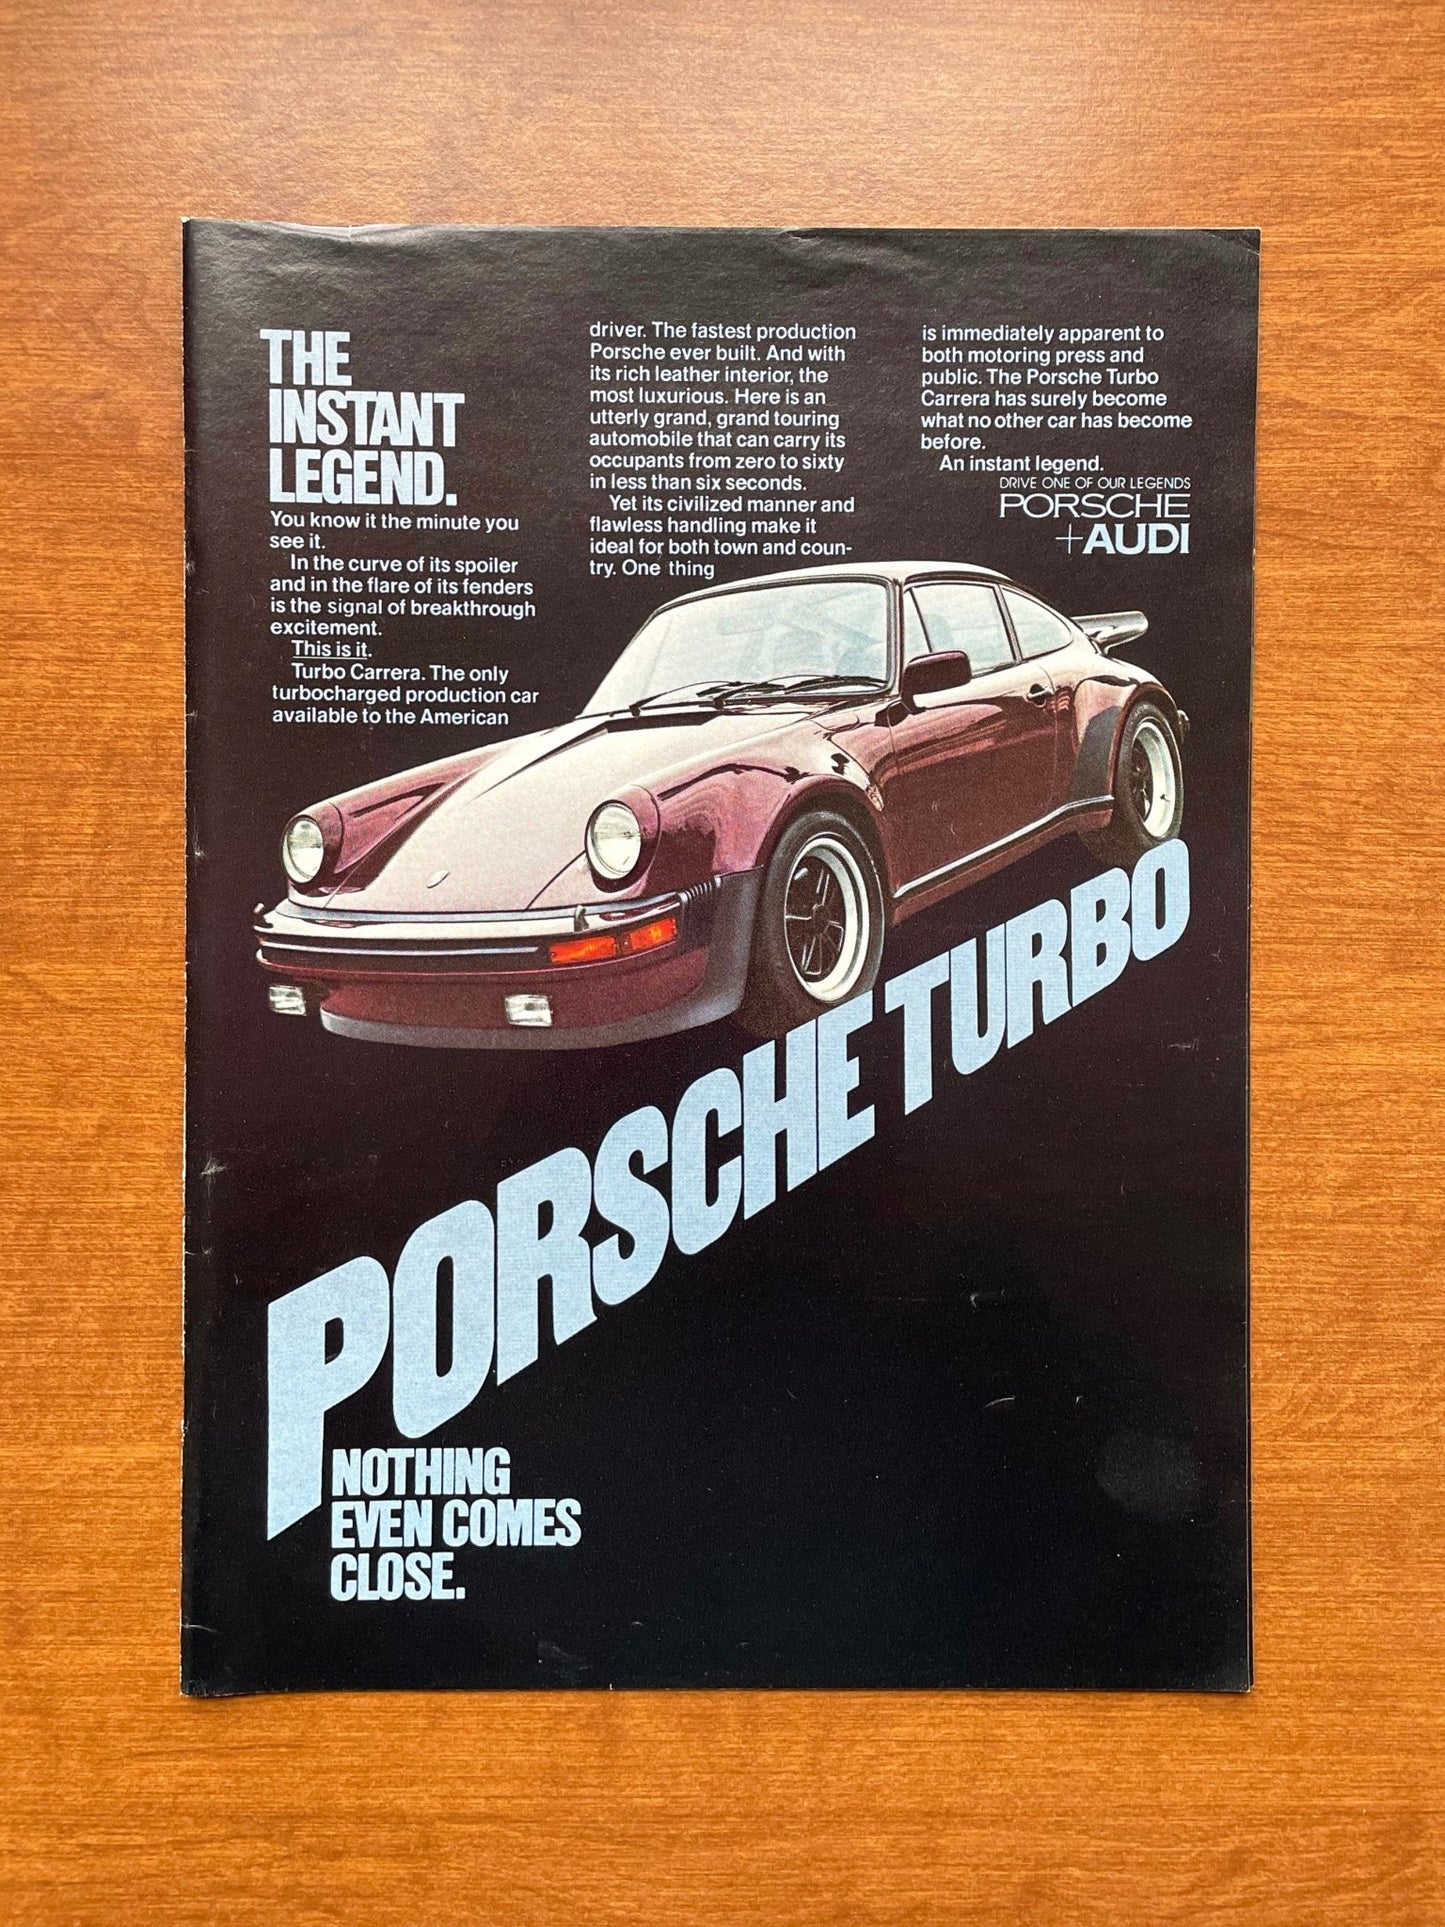 1977 Porsche Turbo Carrera "The Instant Legend." Advertisement